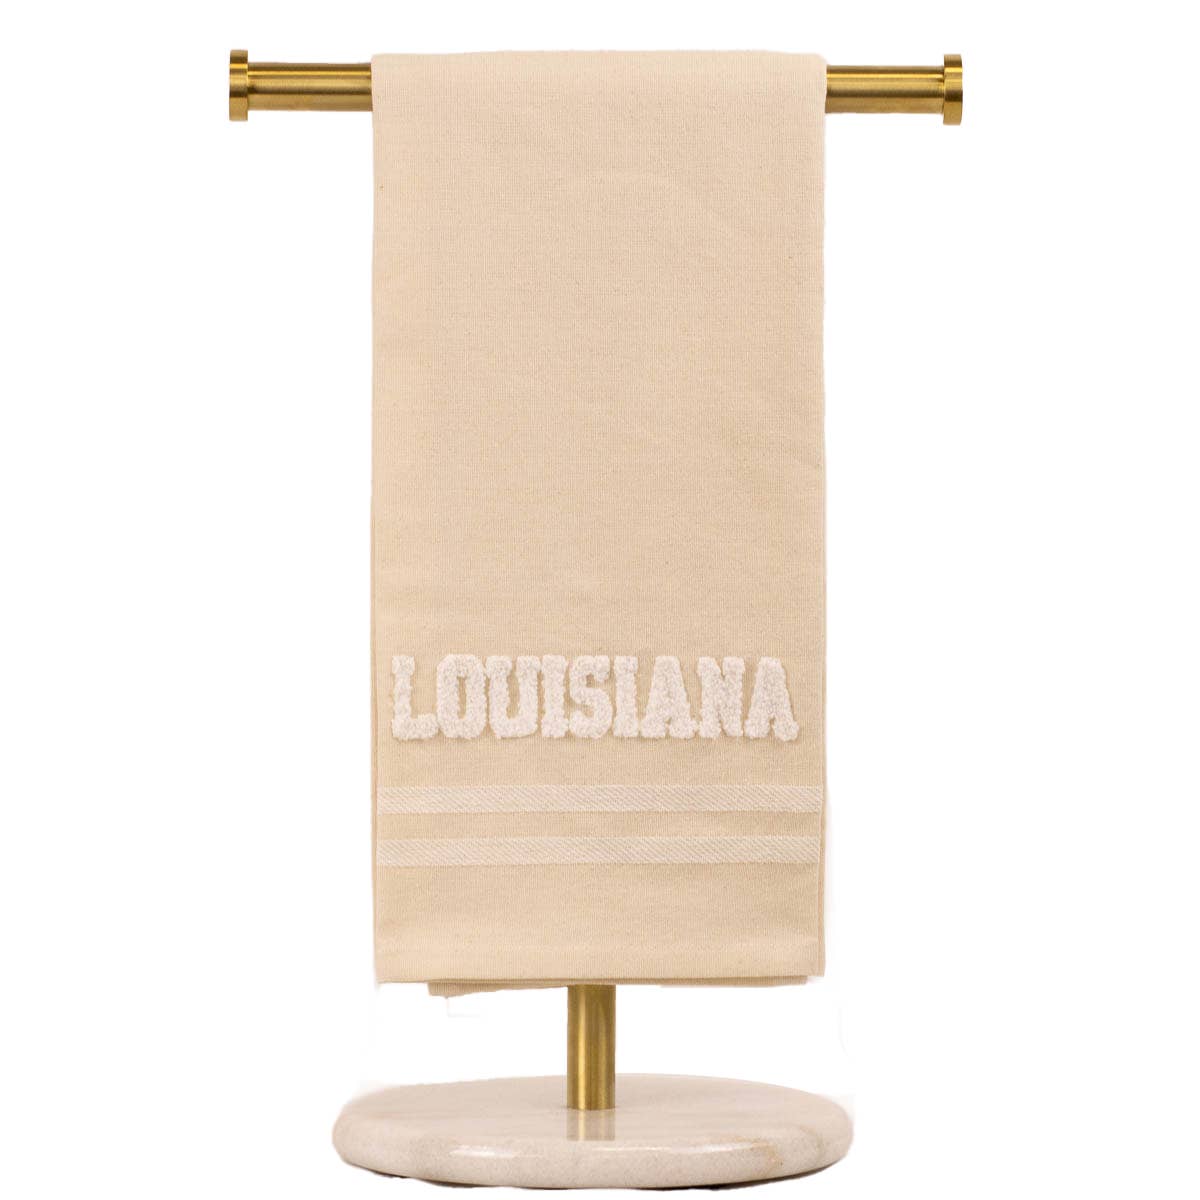 Louisville & Nashville Railroad Embroidered Hand Towel [20]